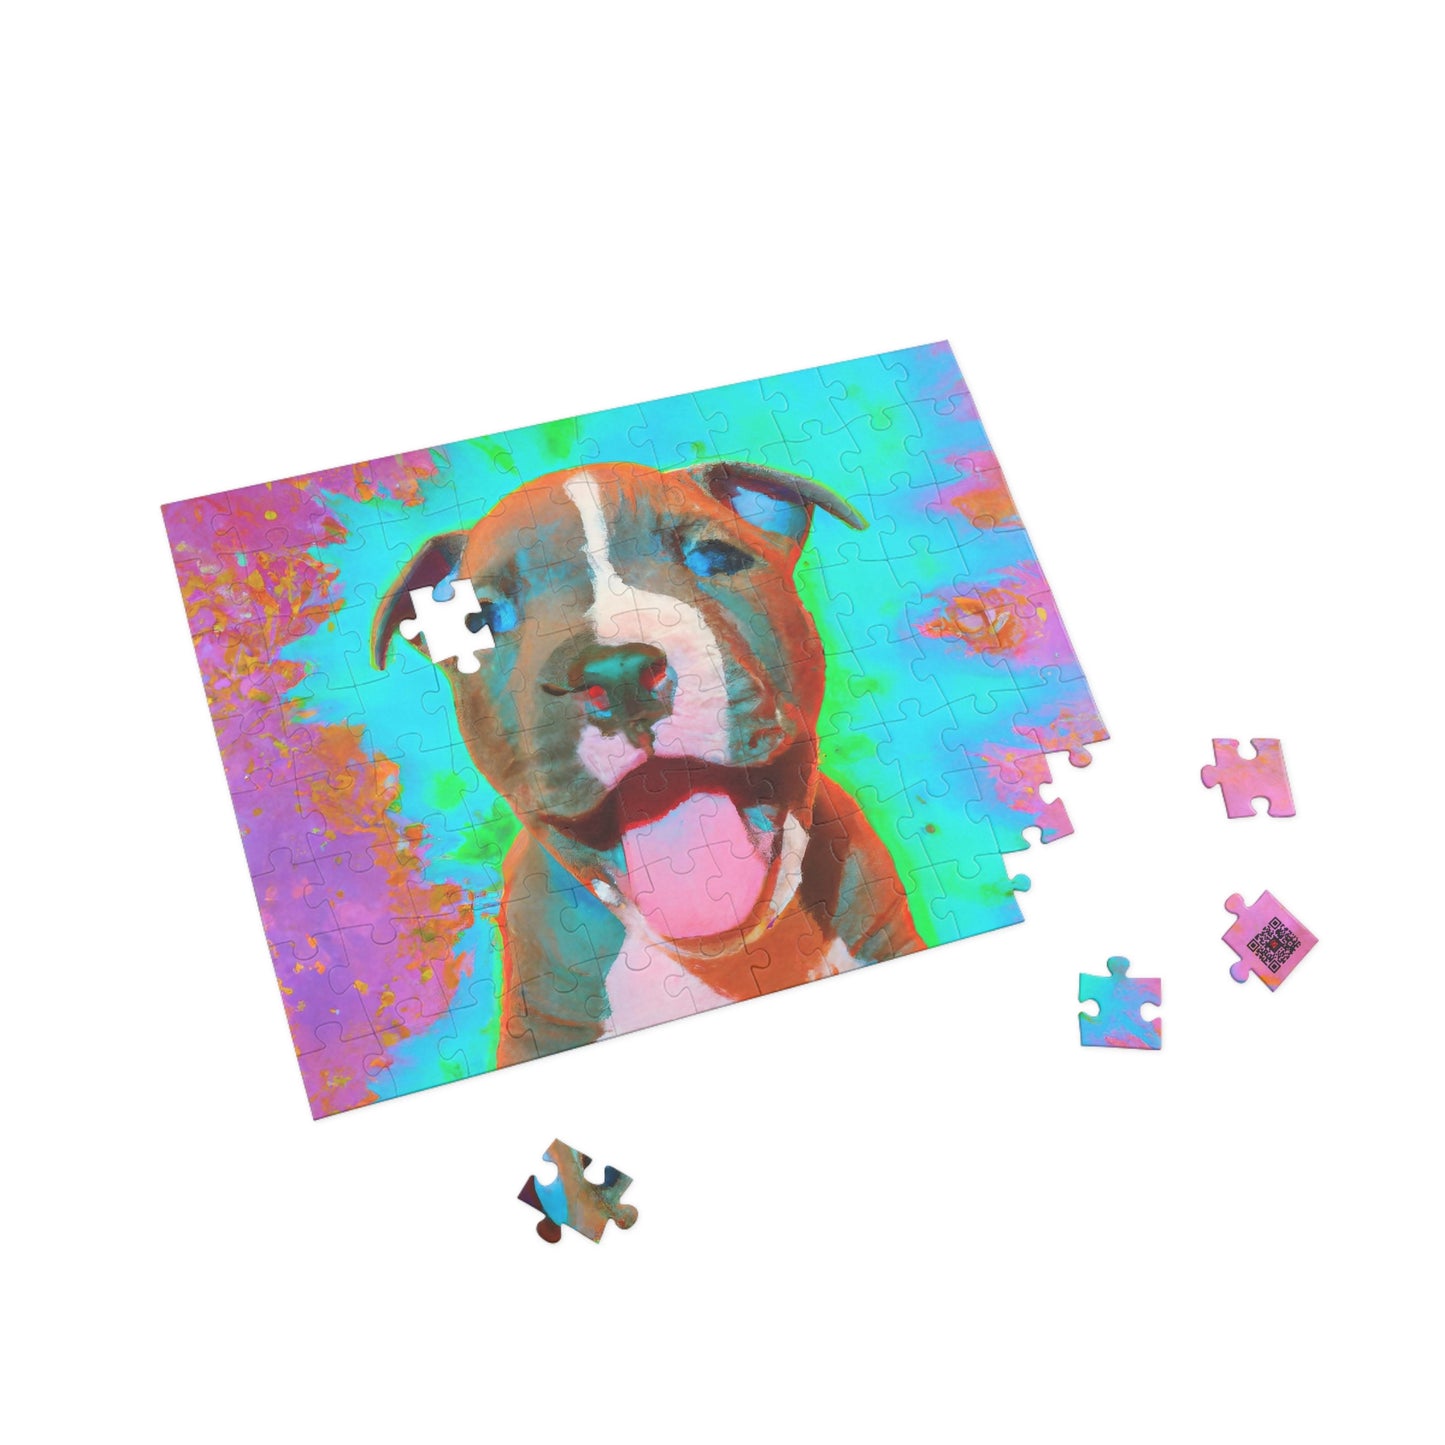 Princess Zahara Artivus - Pitbull Puppy - Puzzle